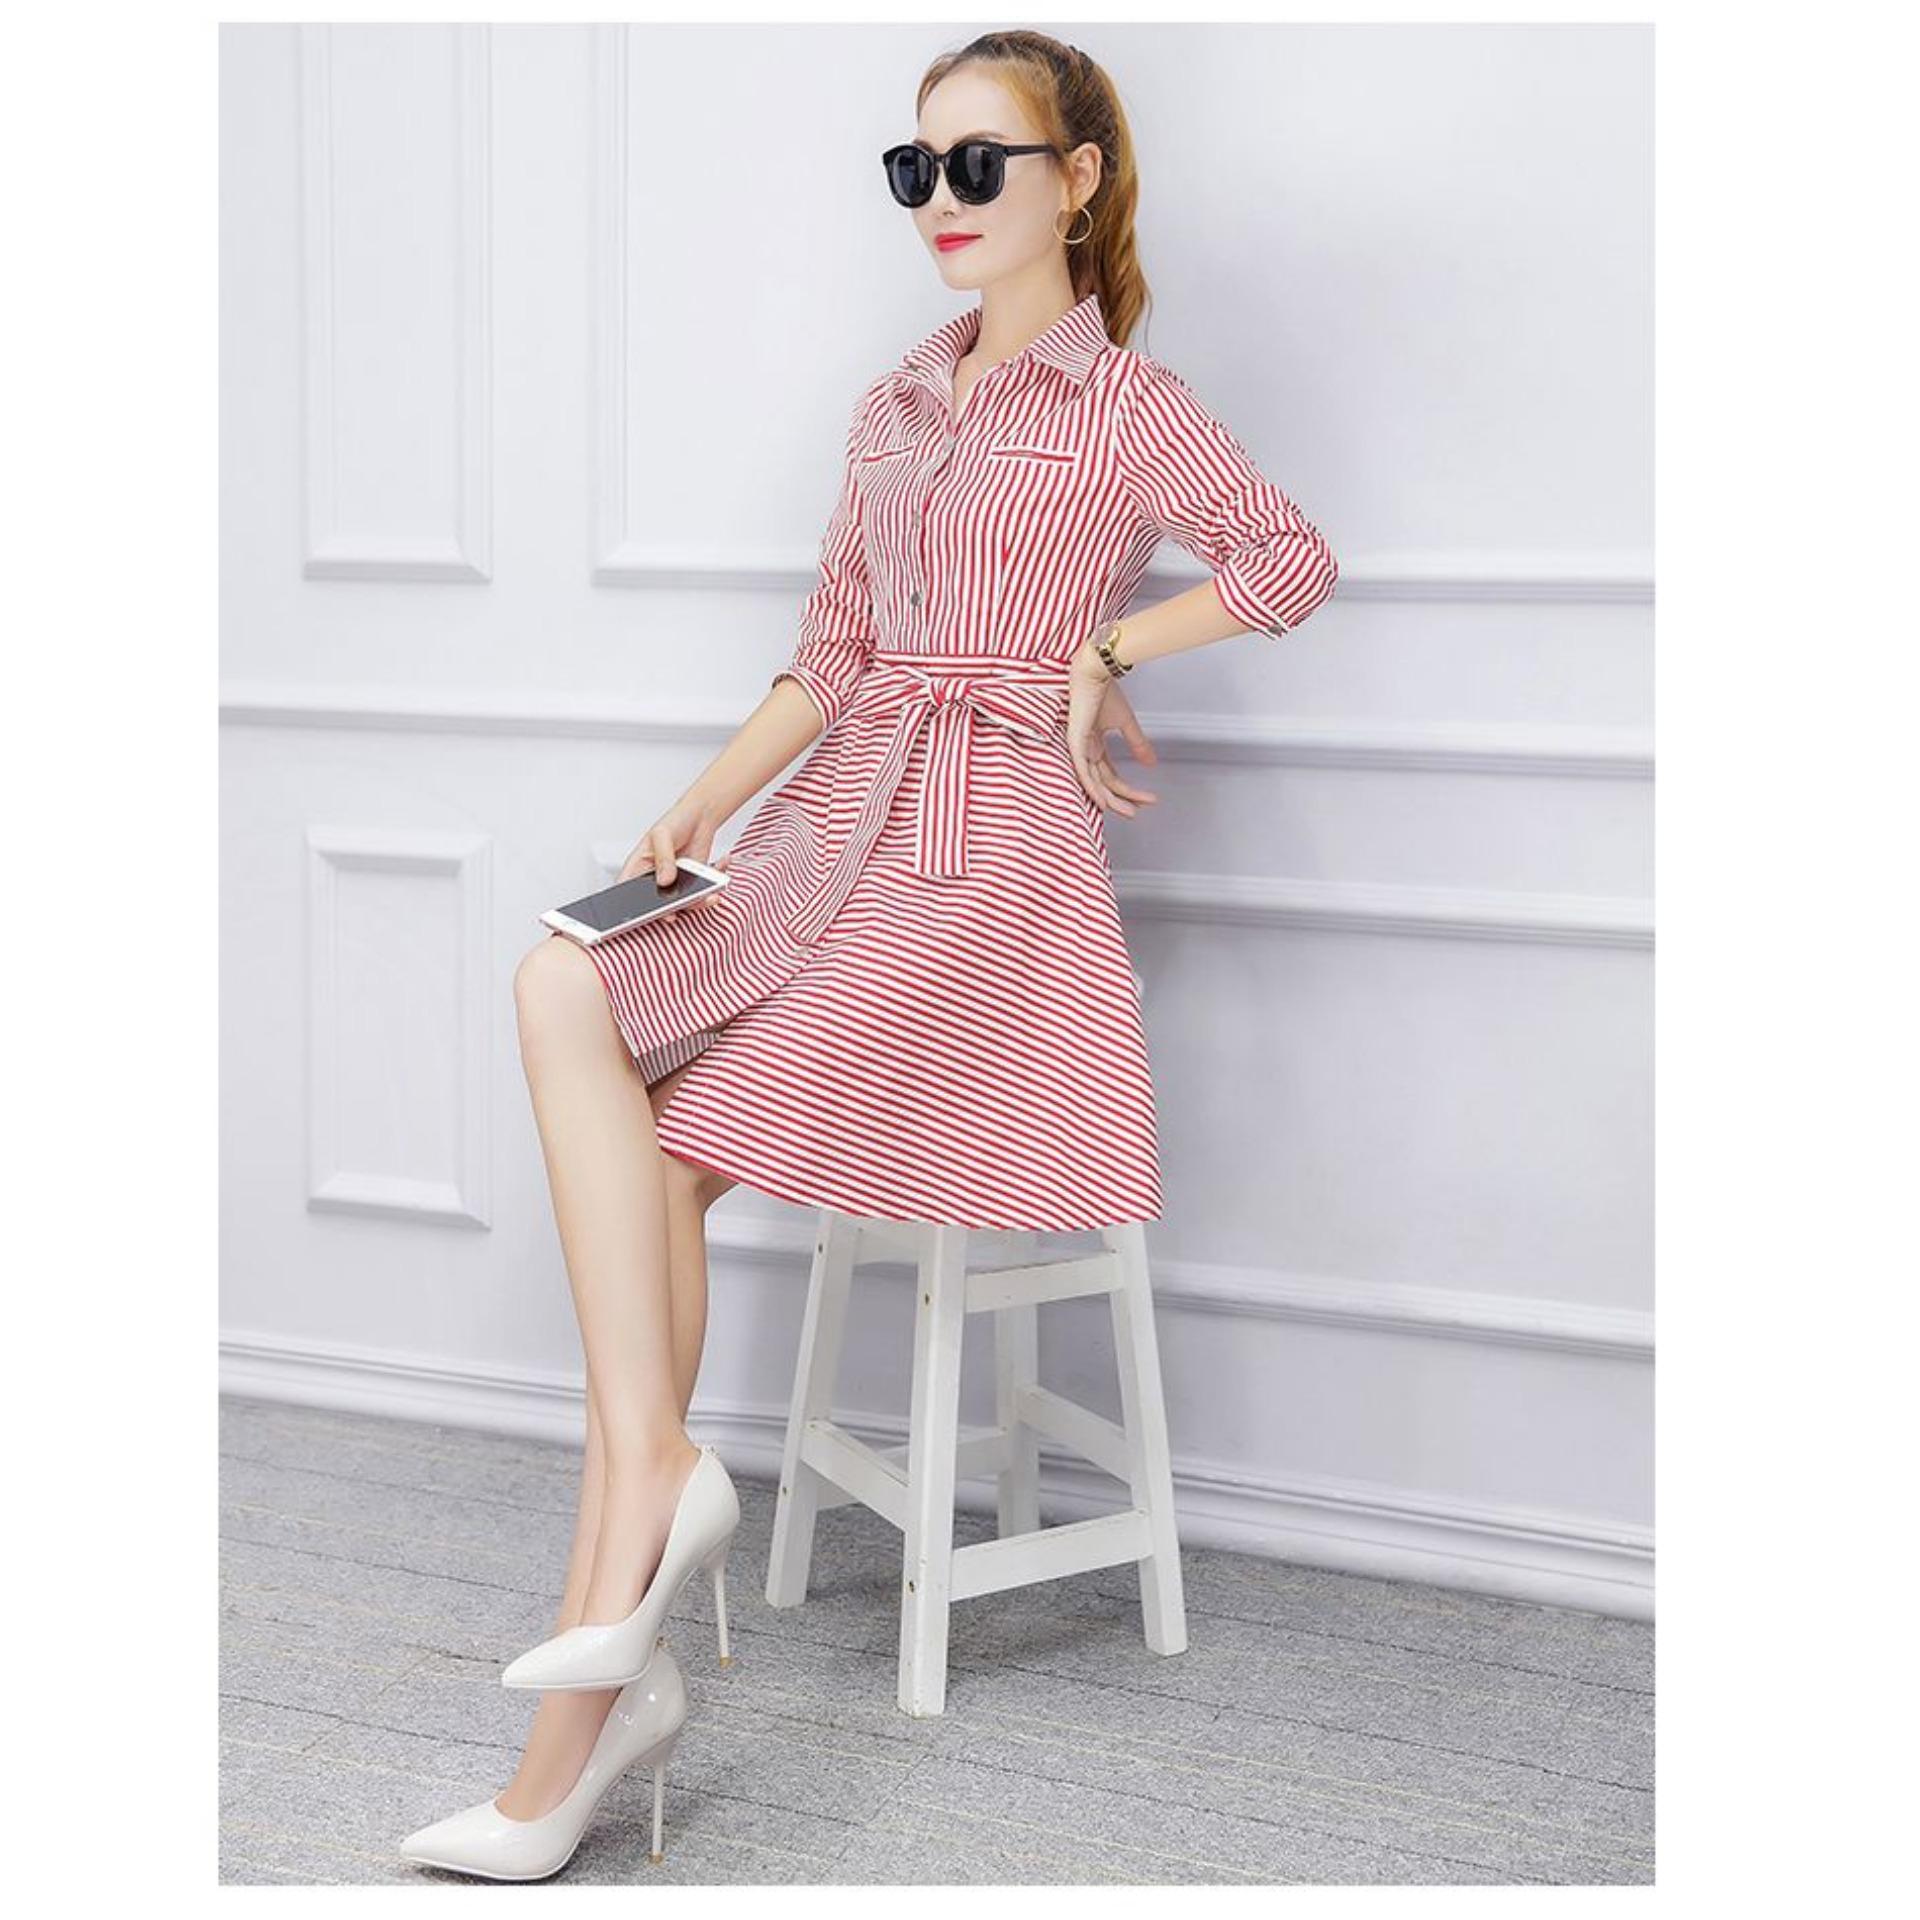 Cicilia Kaos Fashion Wanita Cantik Panjang Pink - Smart4K 